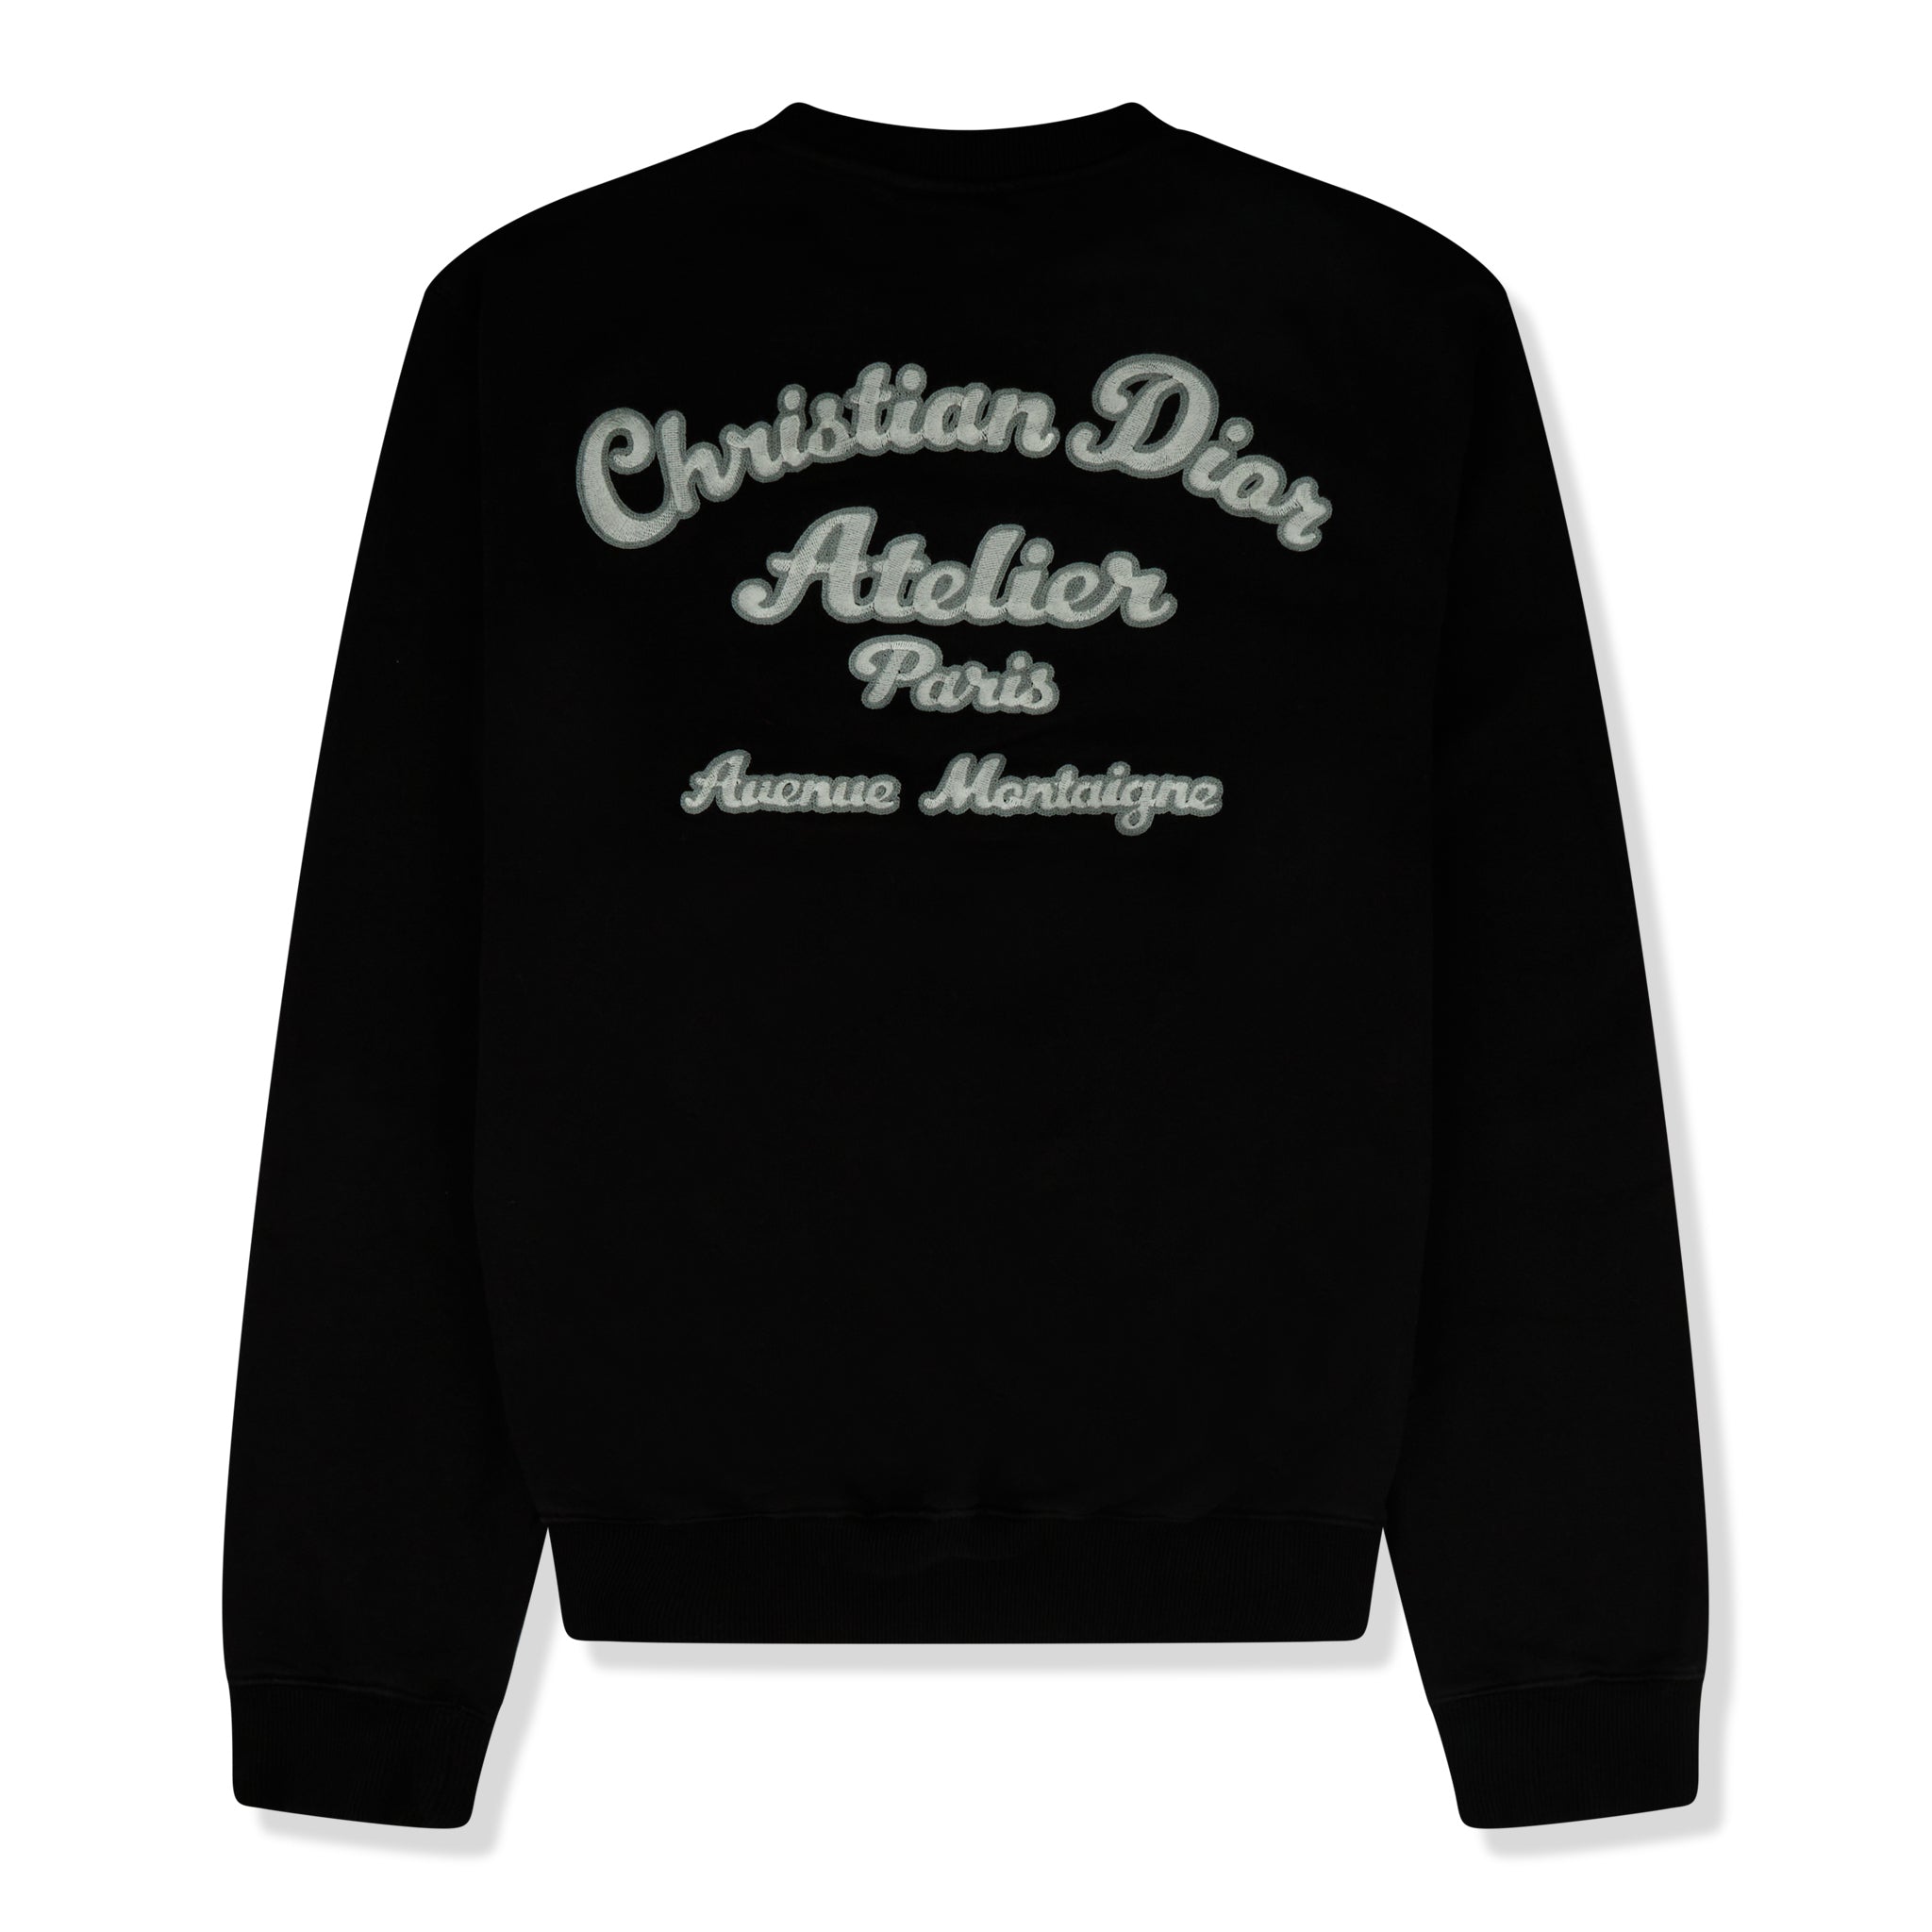 Image of Dior 'Christian Dior Atelier' Black Sweatshirt